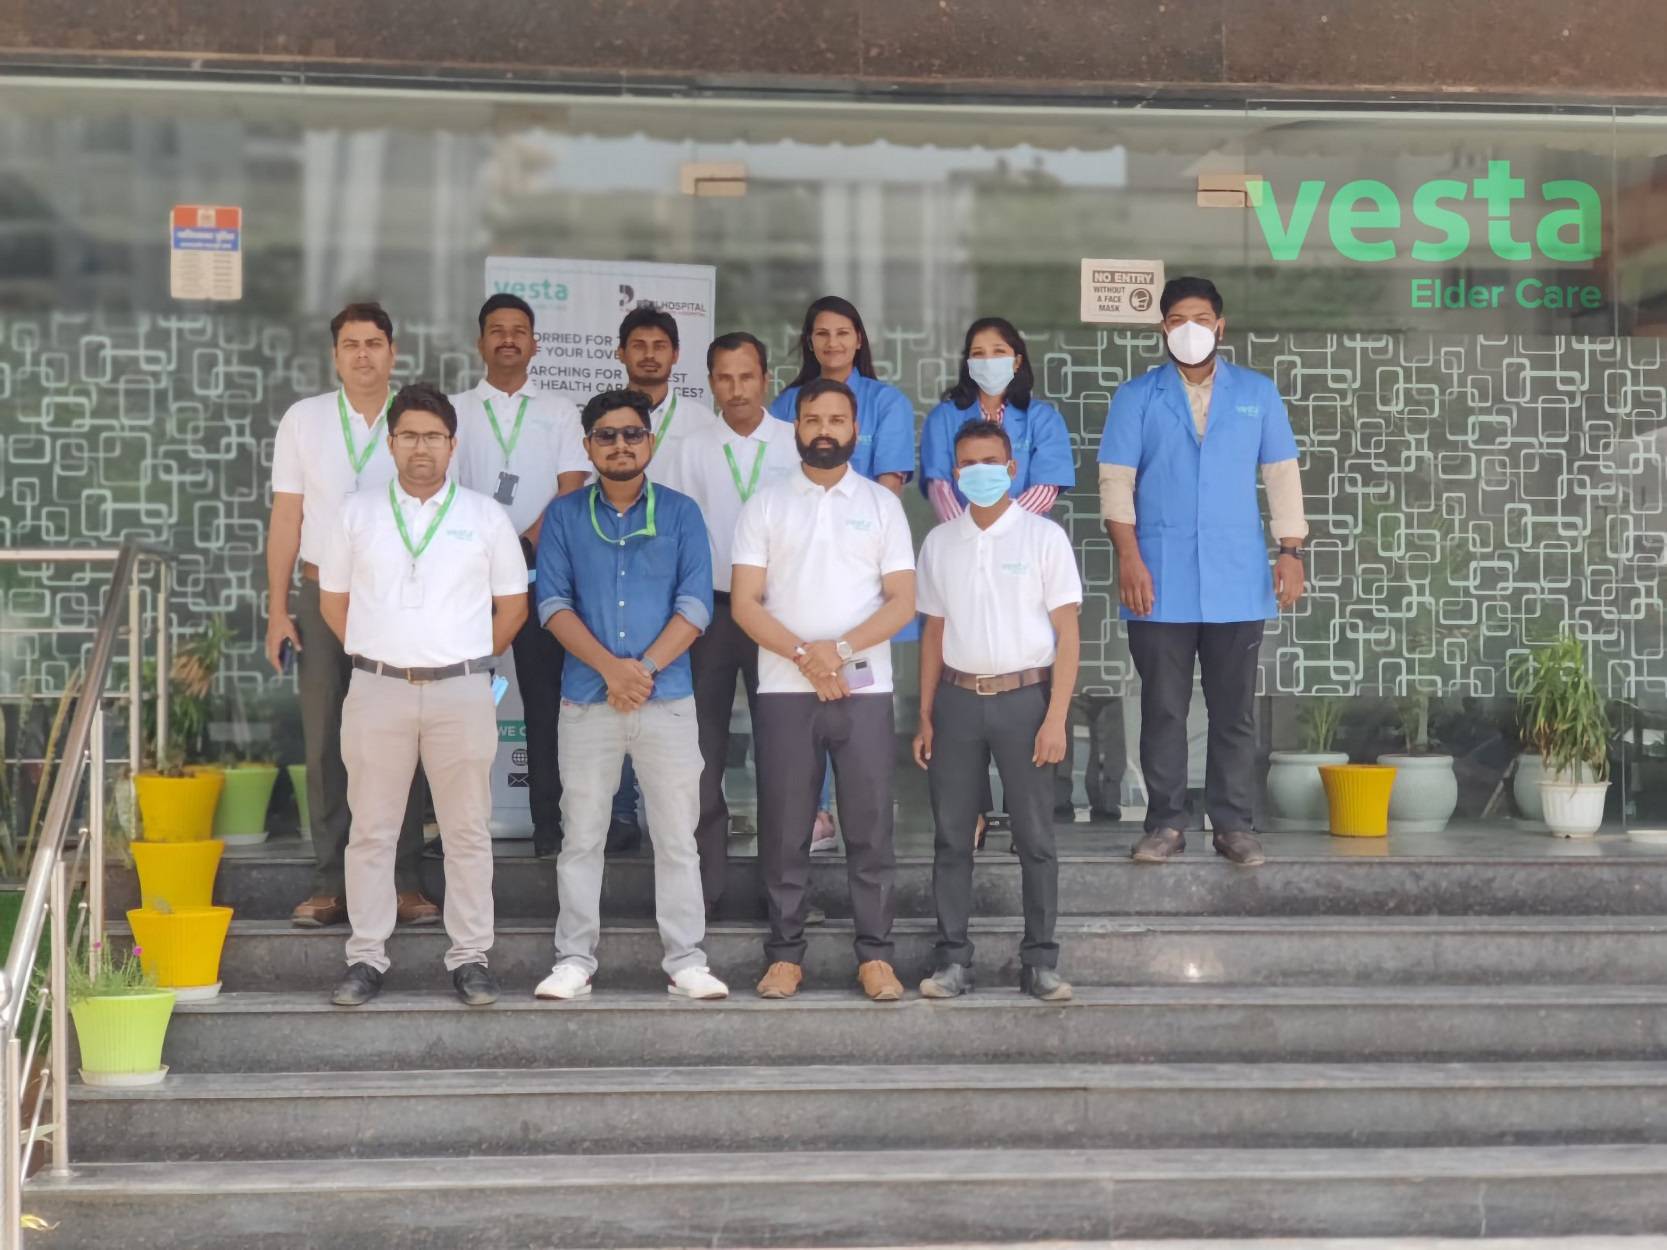 Vesta Elder Care Collaborates With Punjab Hospitals For Out-patients Care - Fatmarathoner